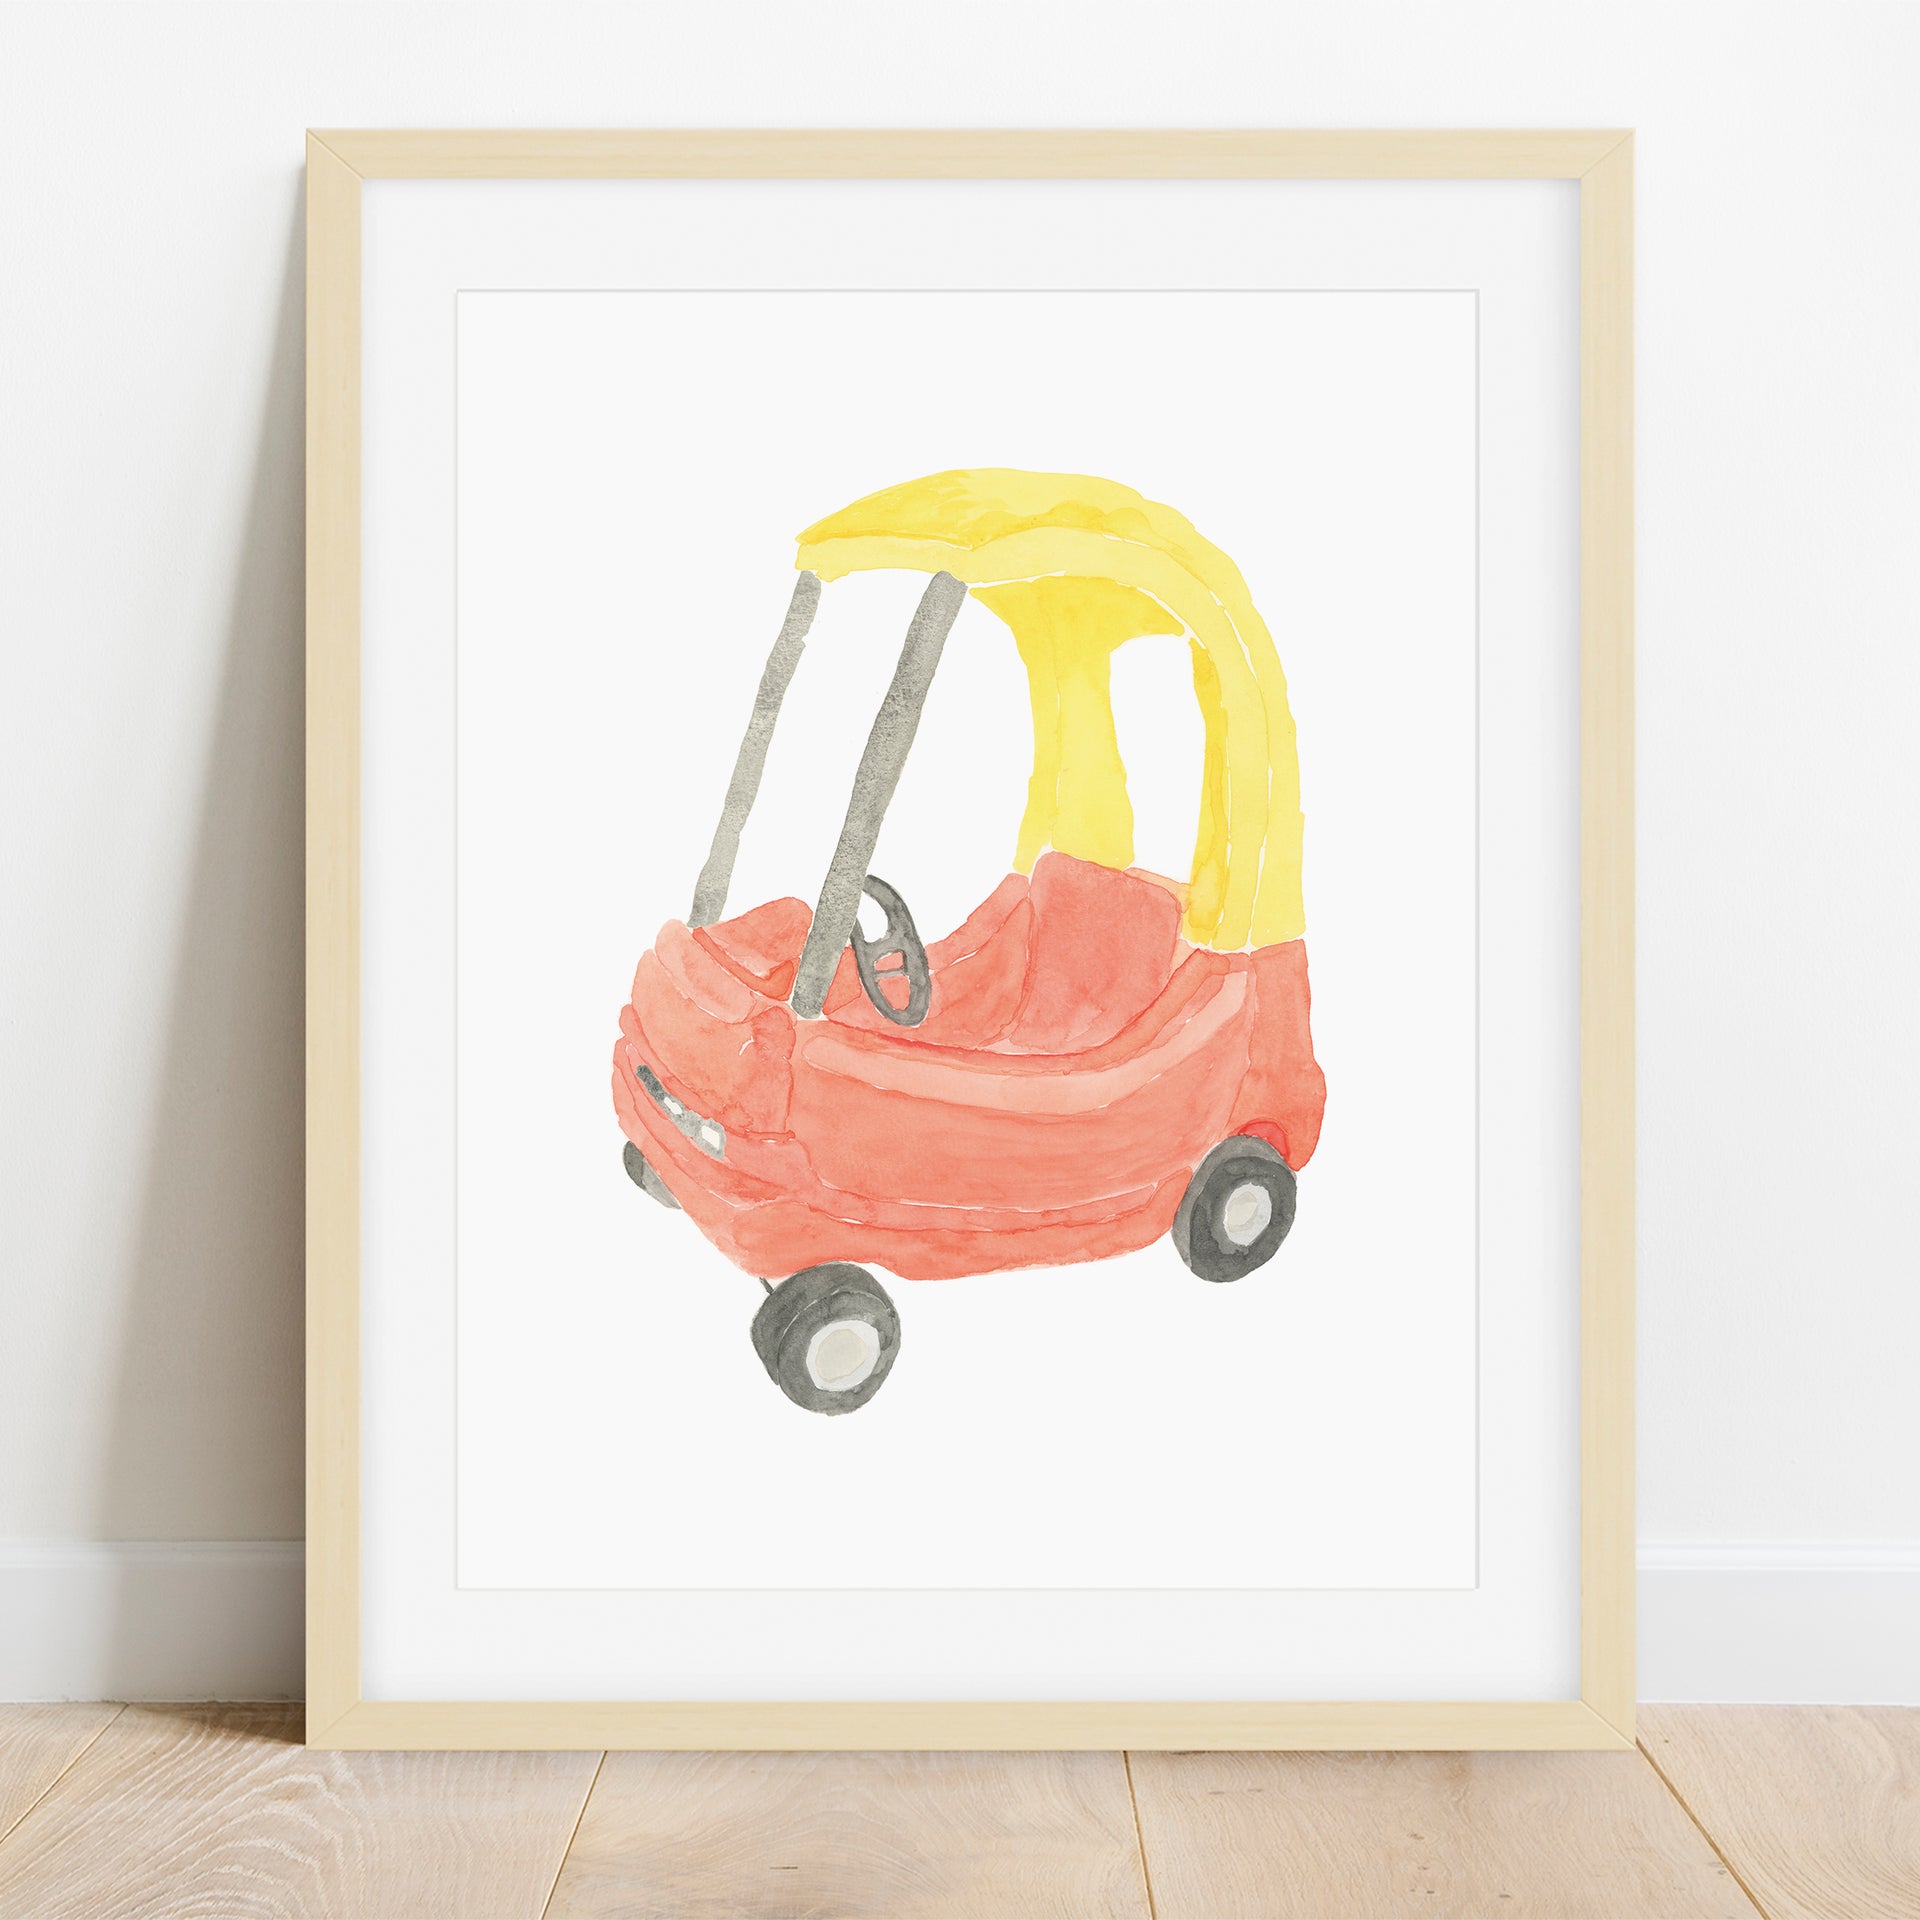 Retro Children's Car Art Print by Gert & Co